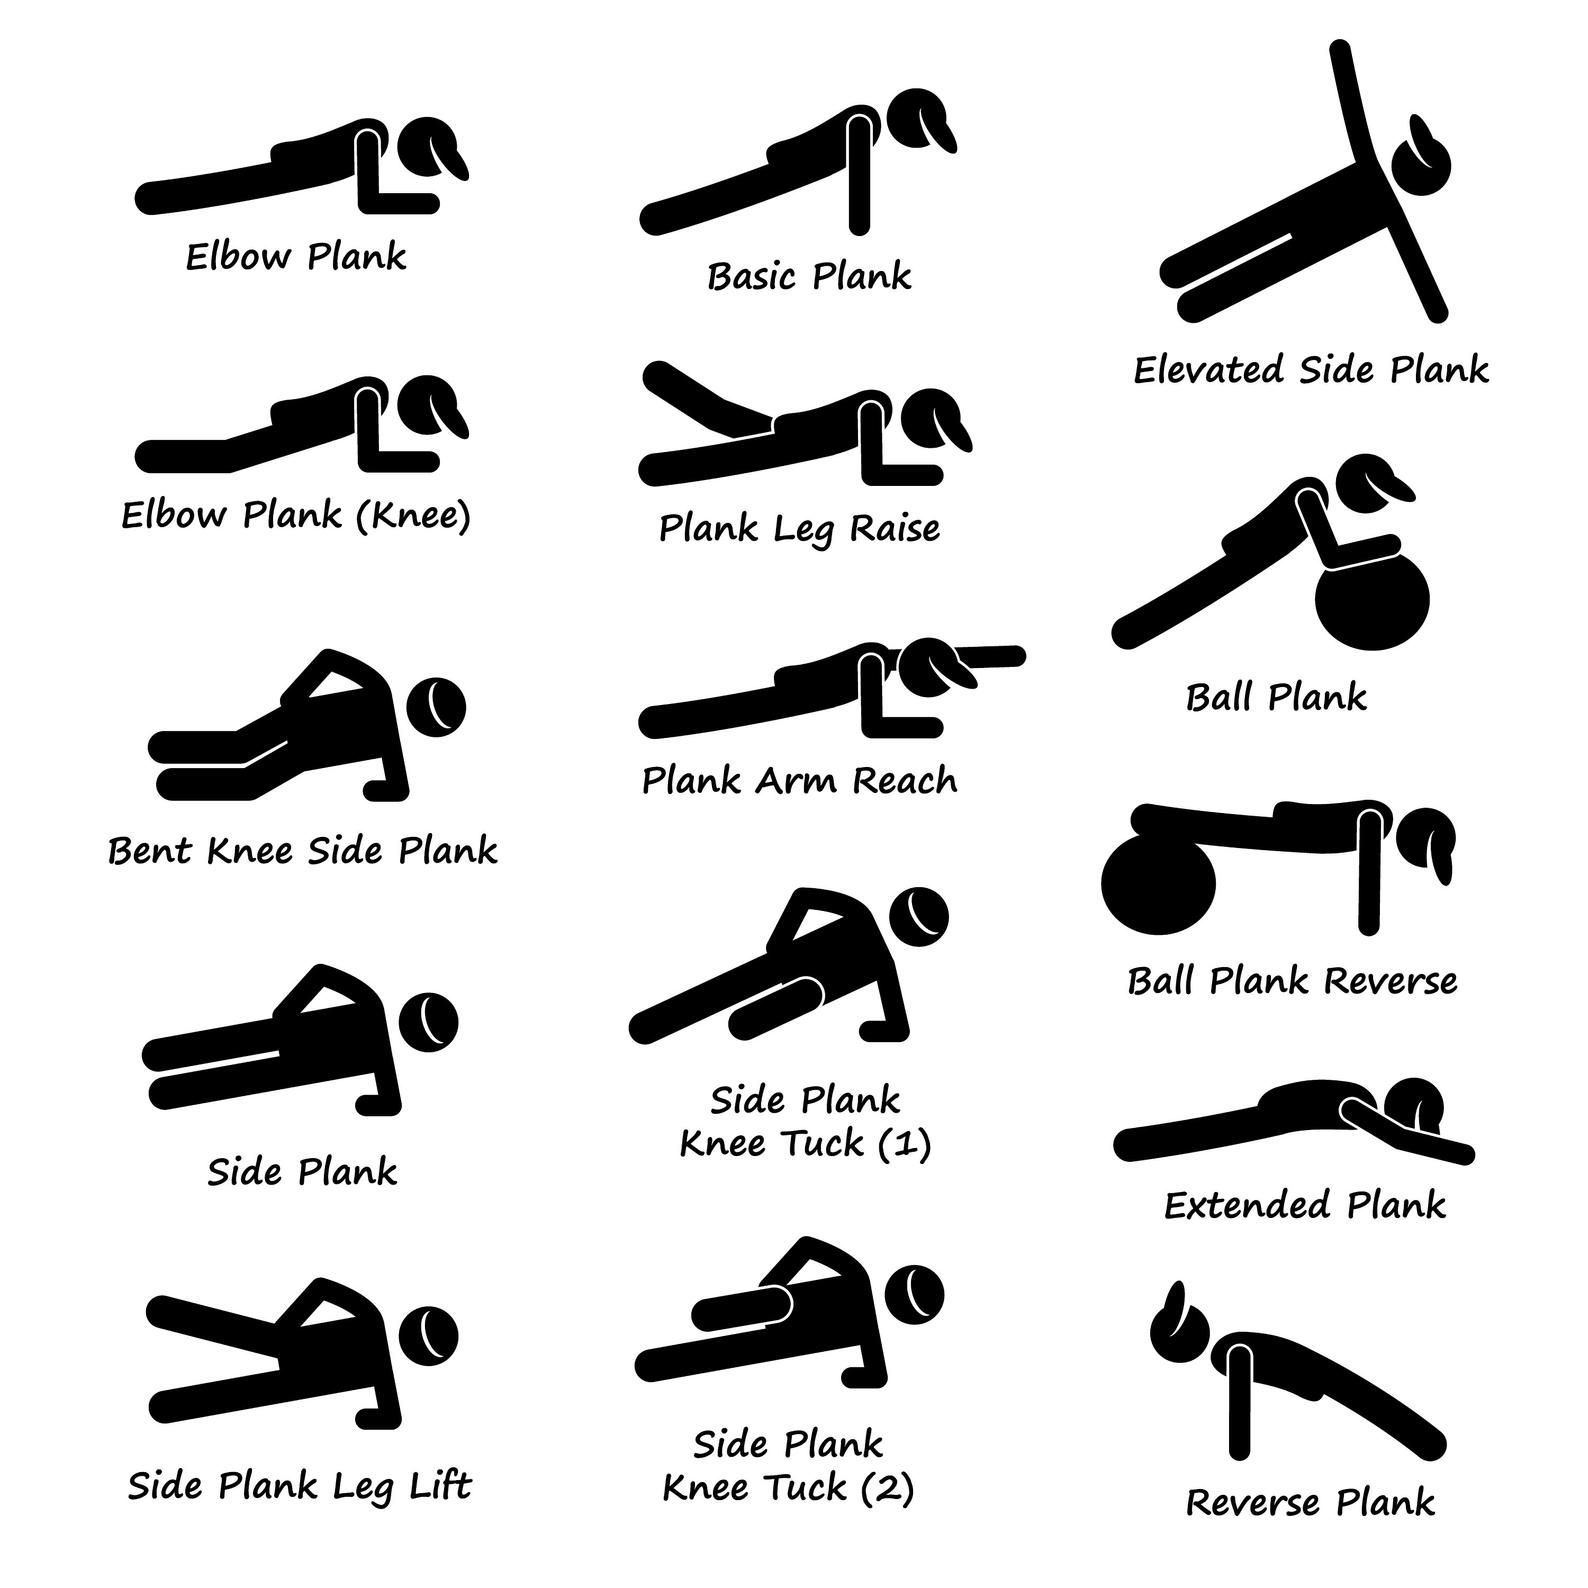 Plank Training Variations Exercise Poses Postures Strength | Etsy - Plank Training Variations Exercise Poses Postures Strength | Etsy -   17 fitness Challenge women ideas